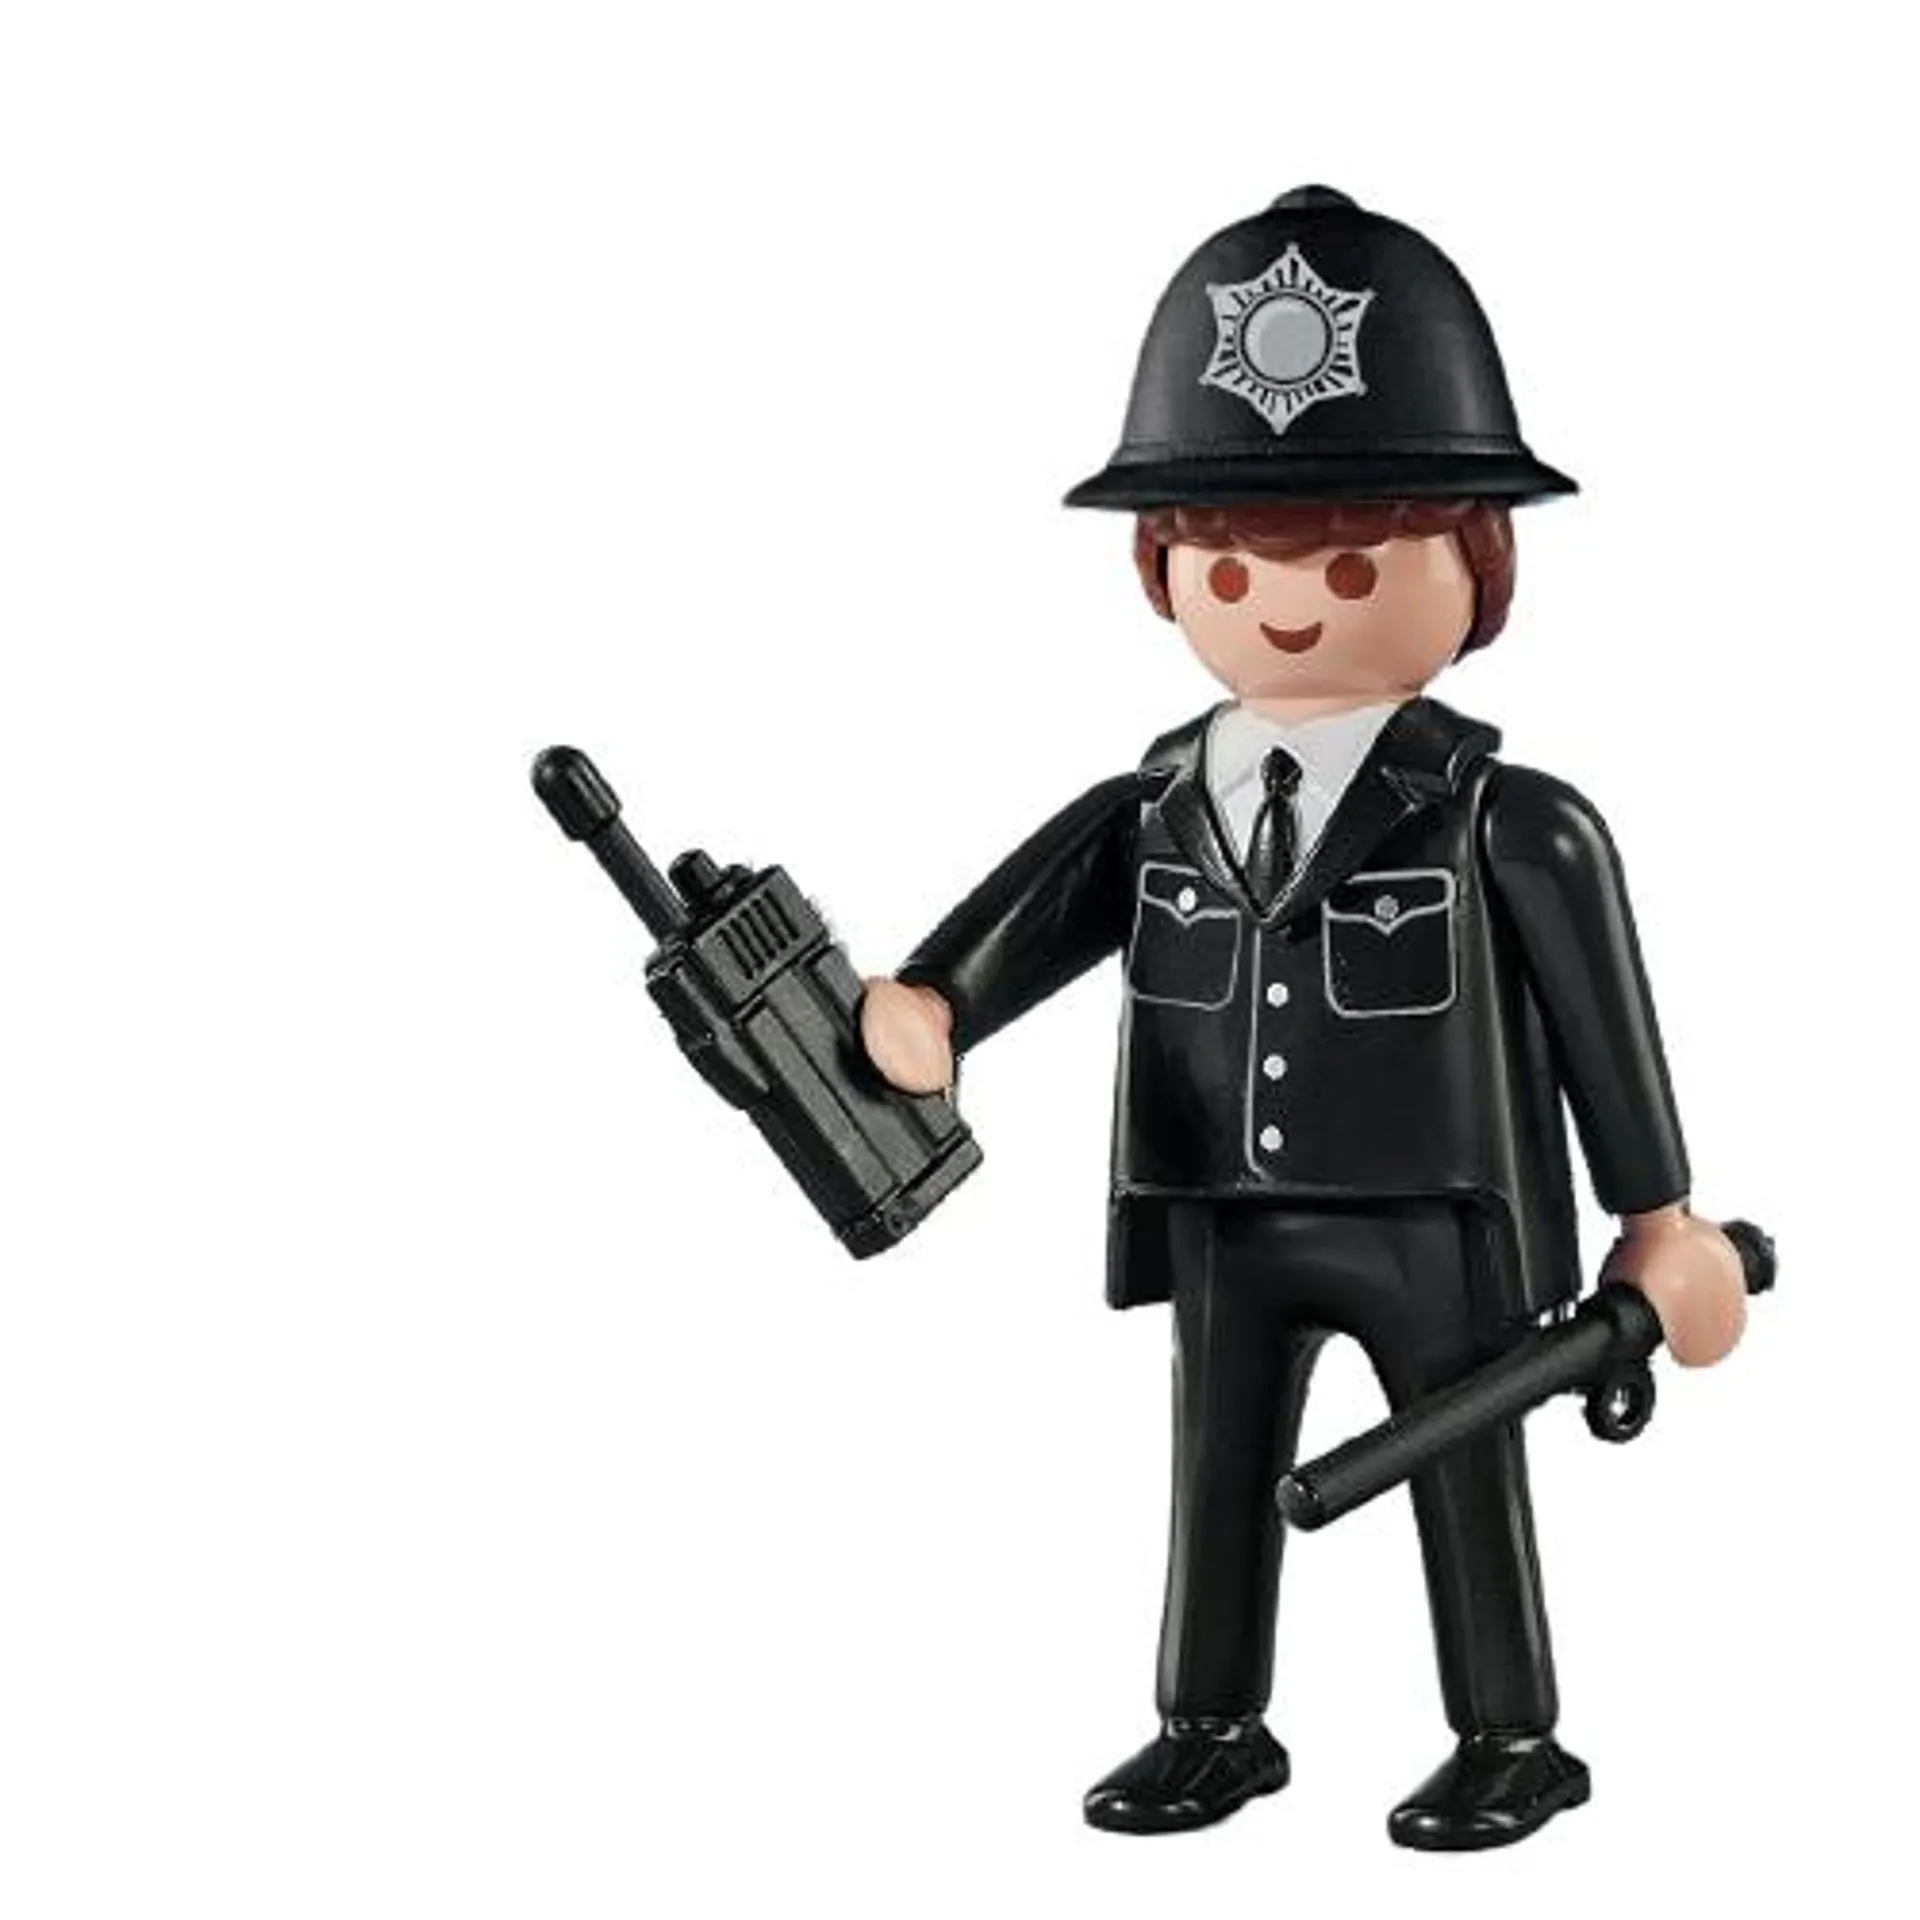 Playmobil Police Bobby 9237